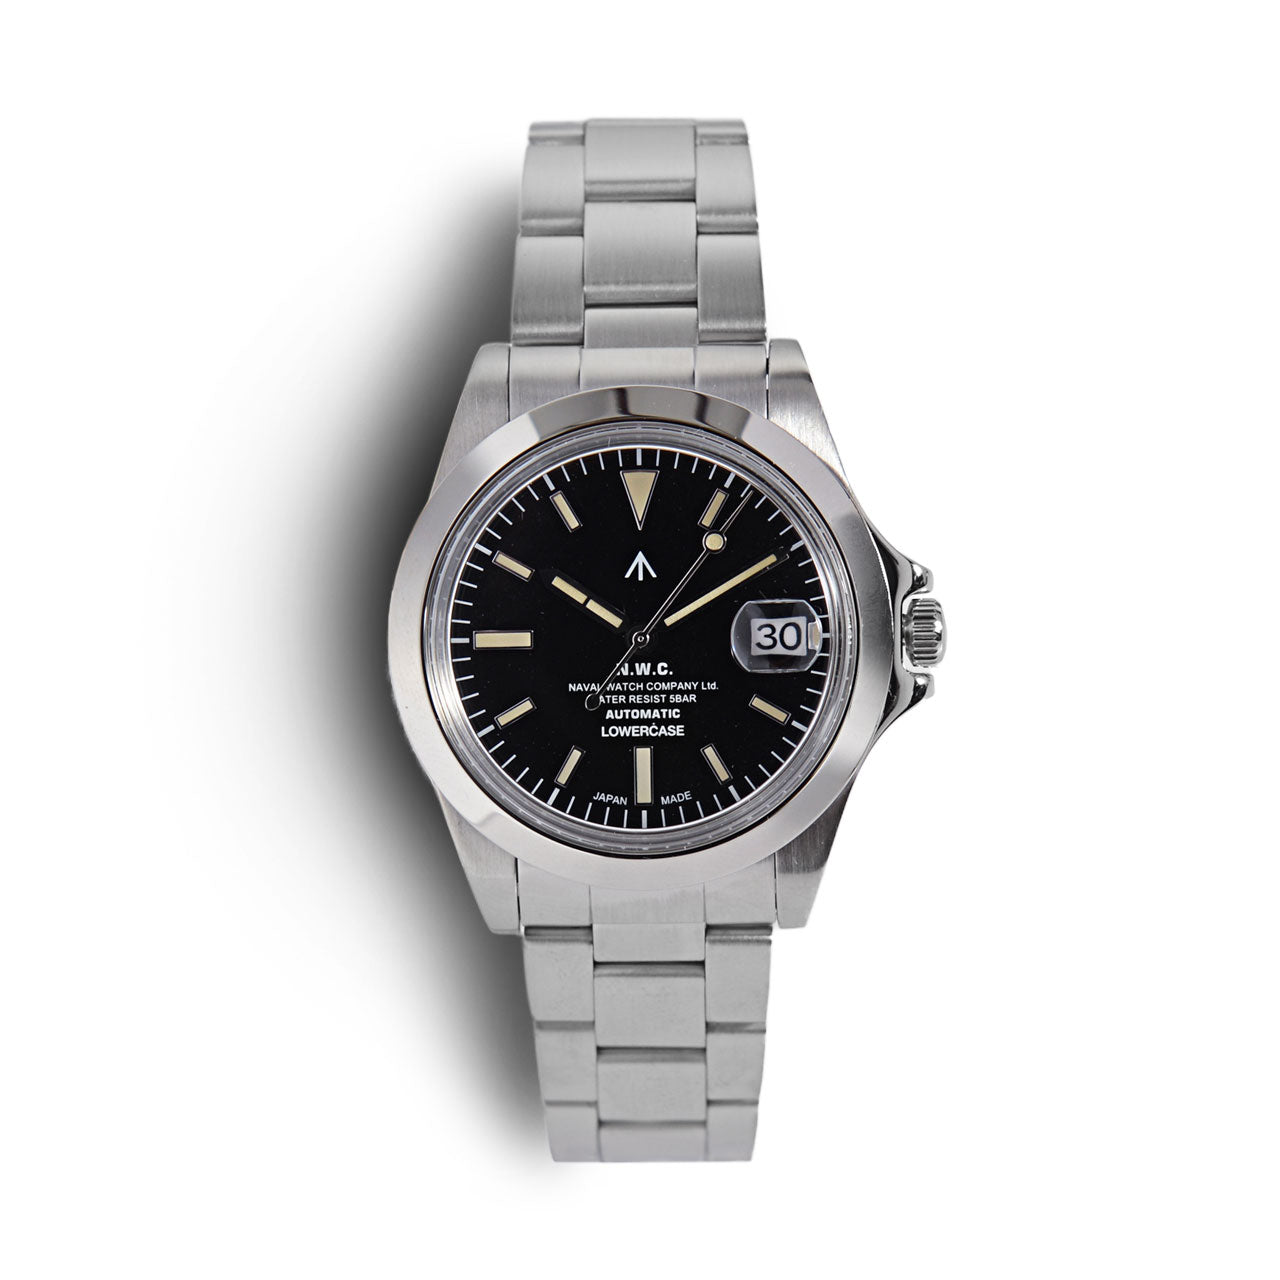 Механические часы Naval Watch Co. FRXA001